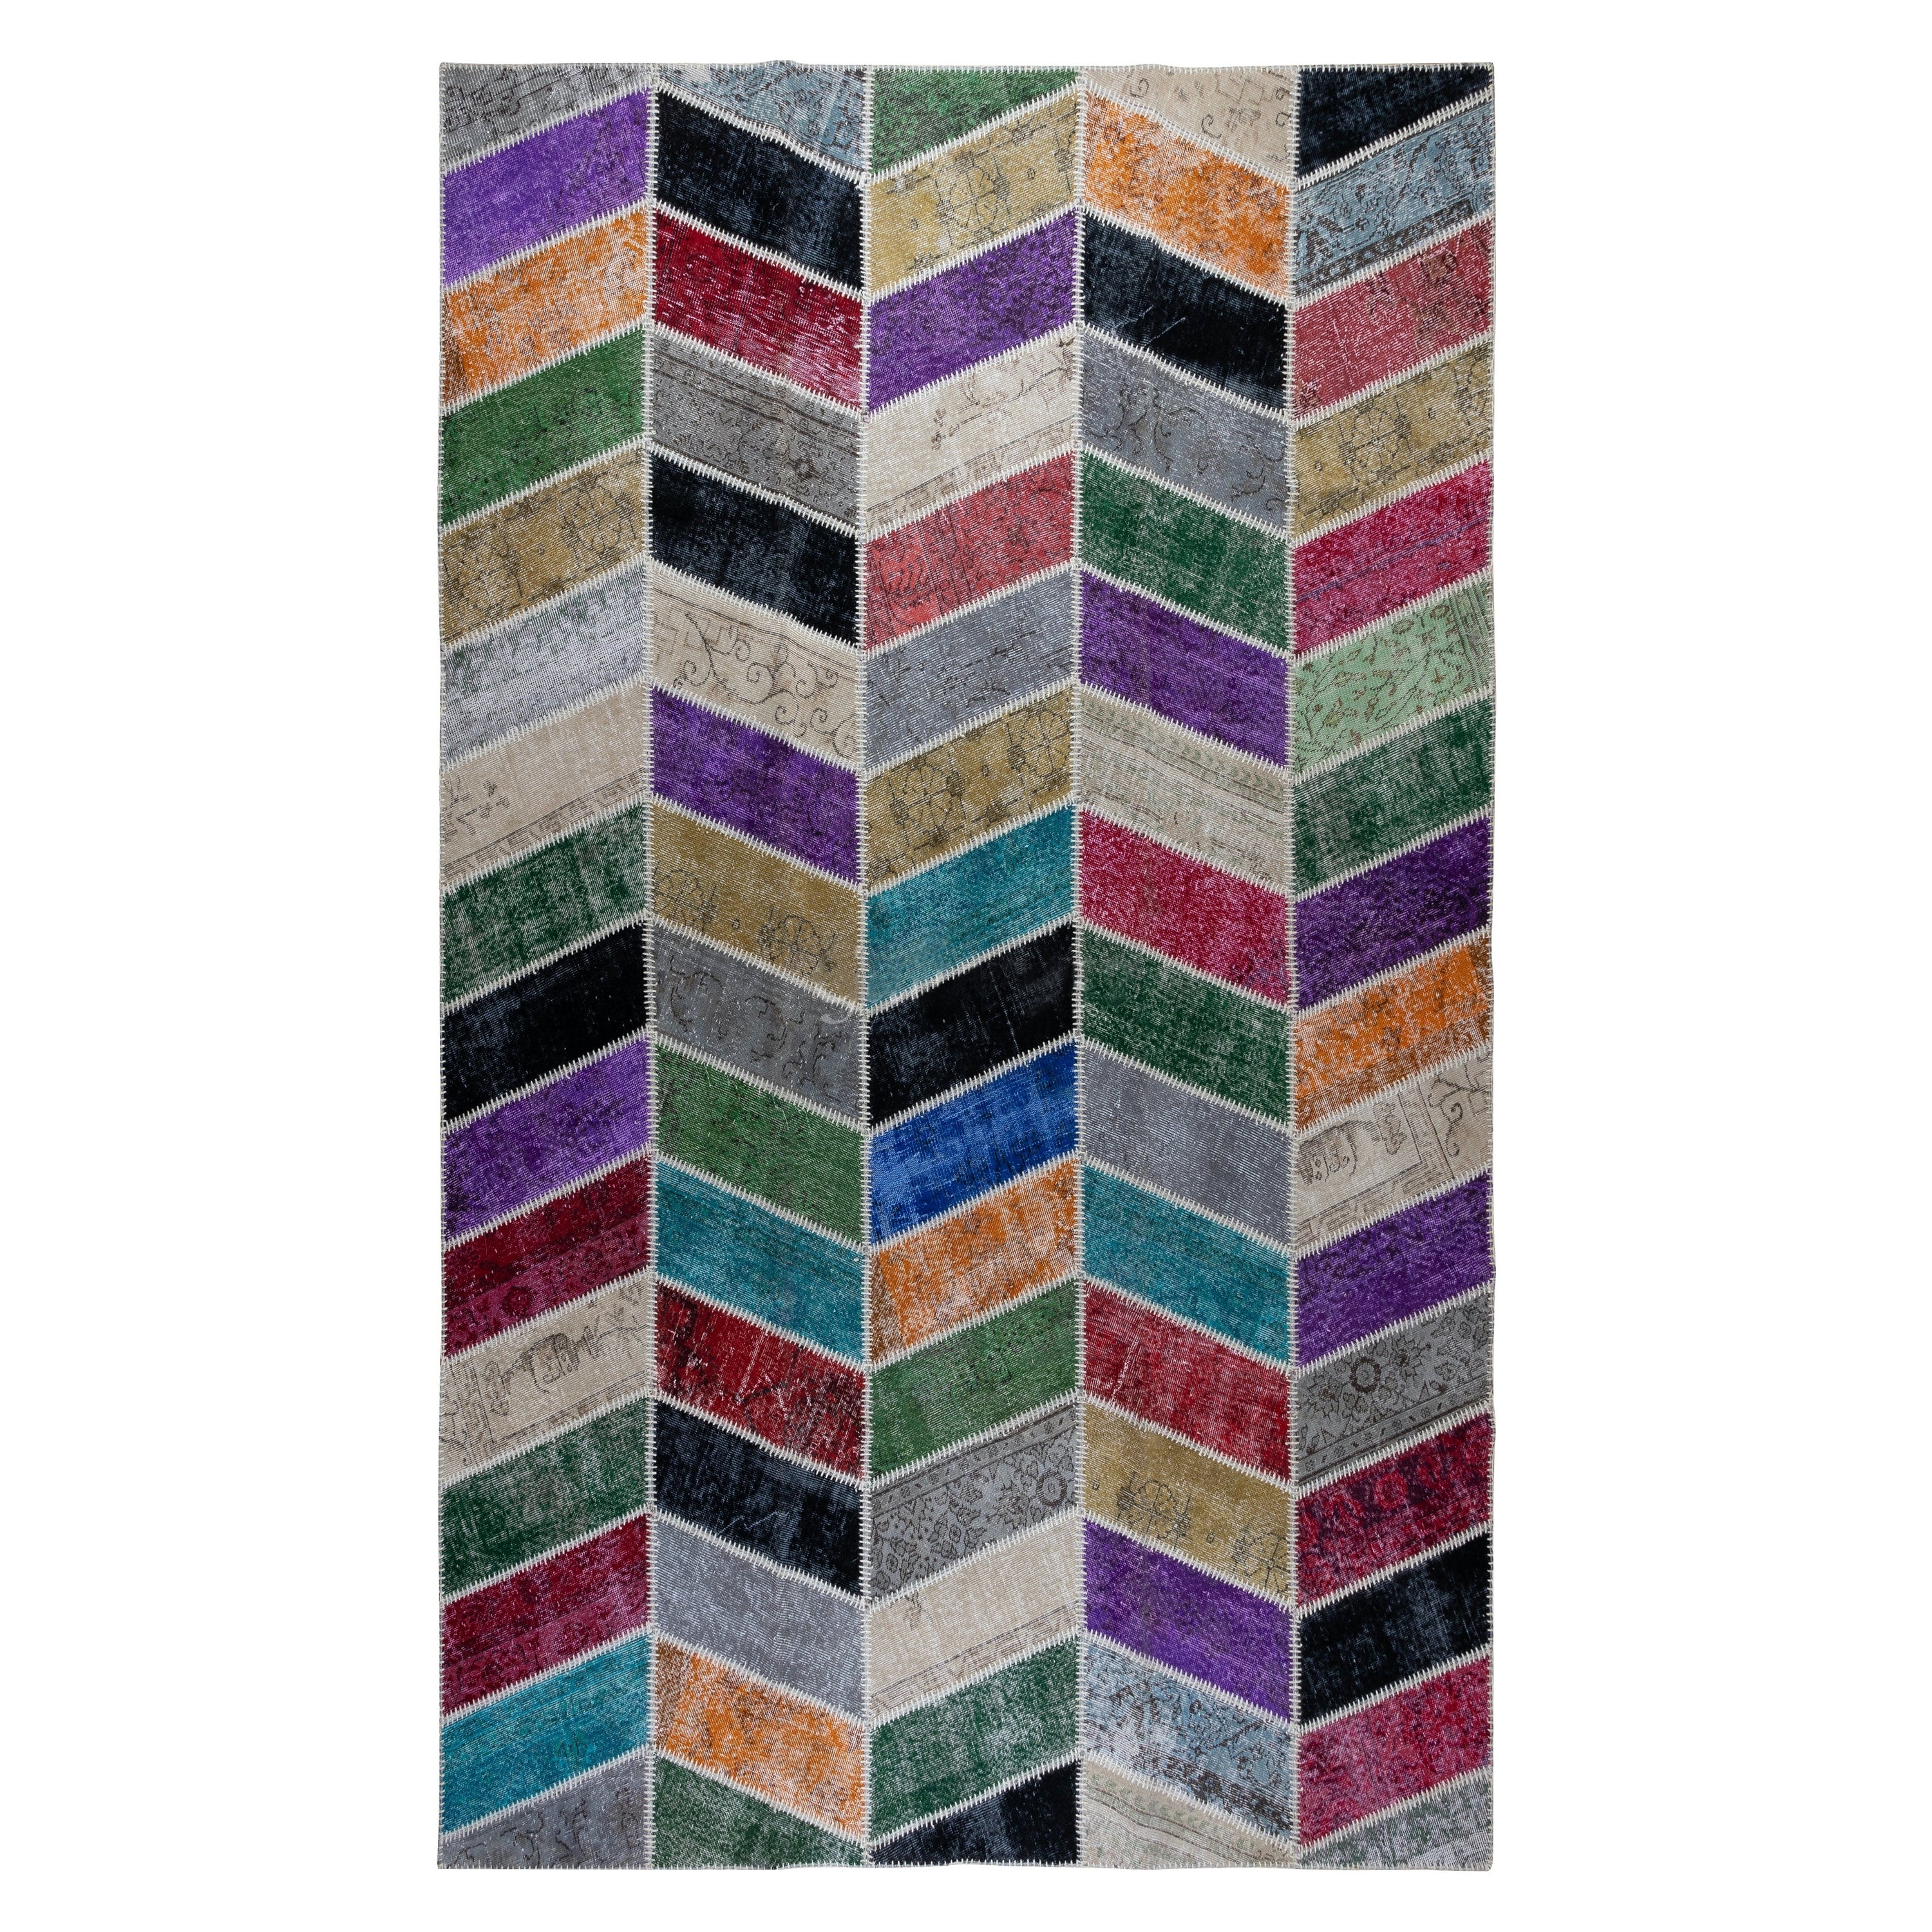 Vibrant Handmade Patchwork Rug. Modern Look Colorful Carpet. Custom Options Ava.